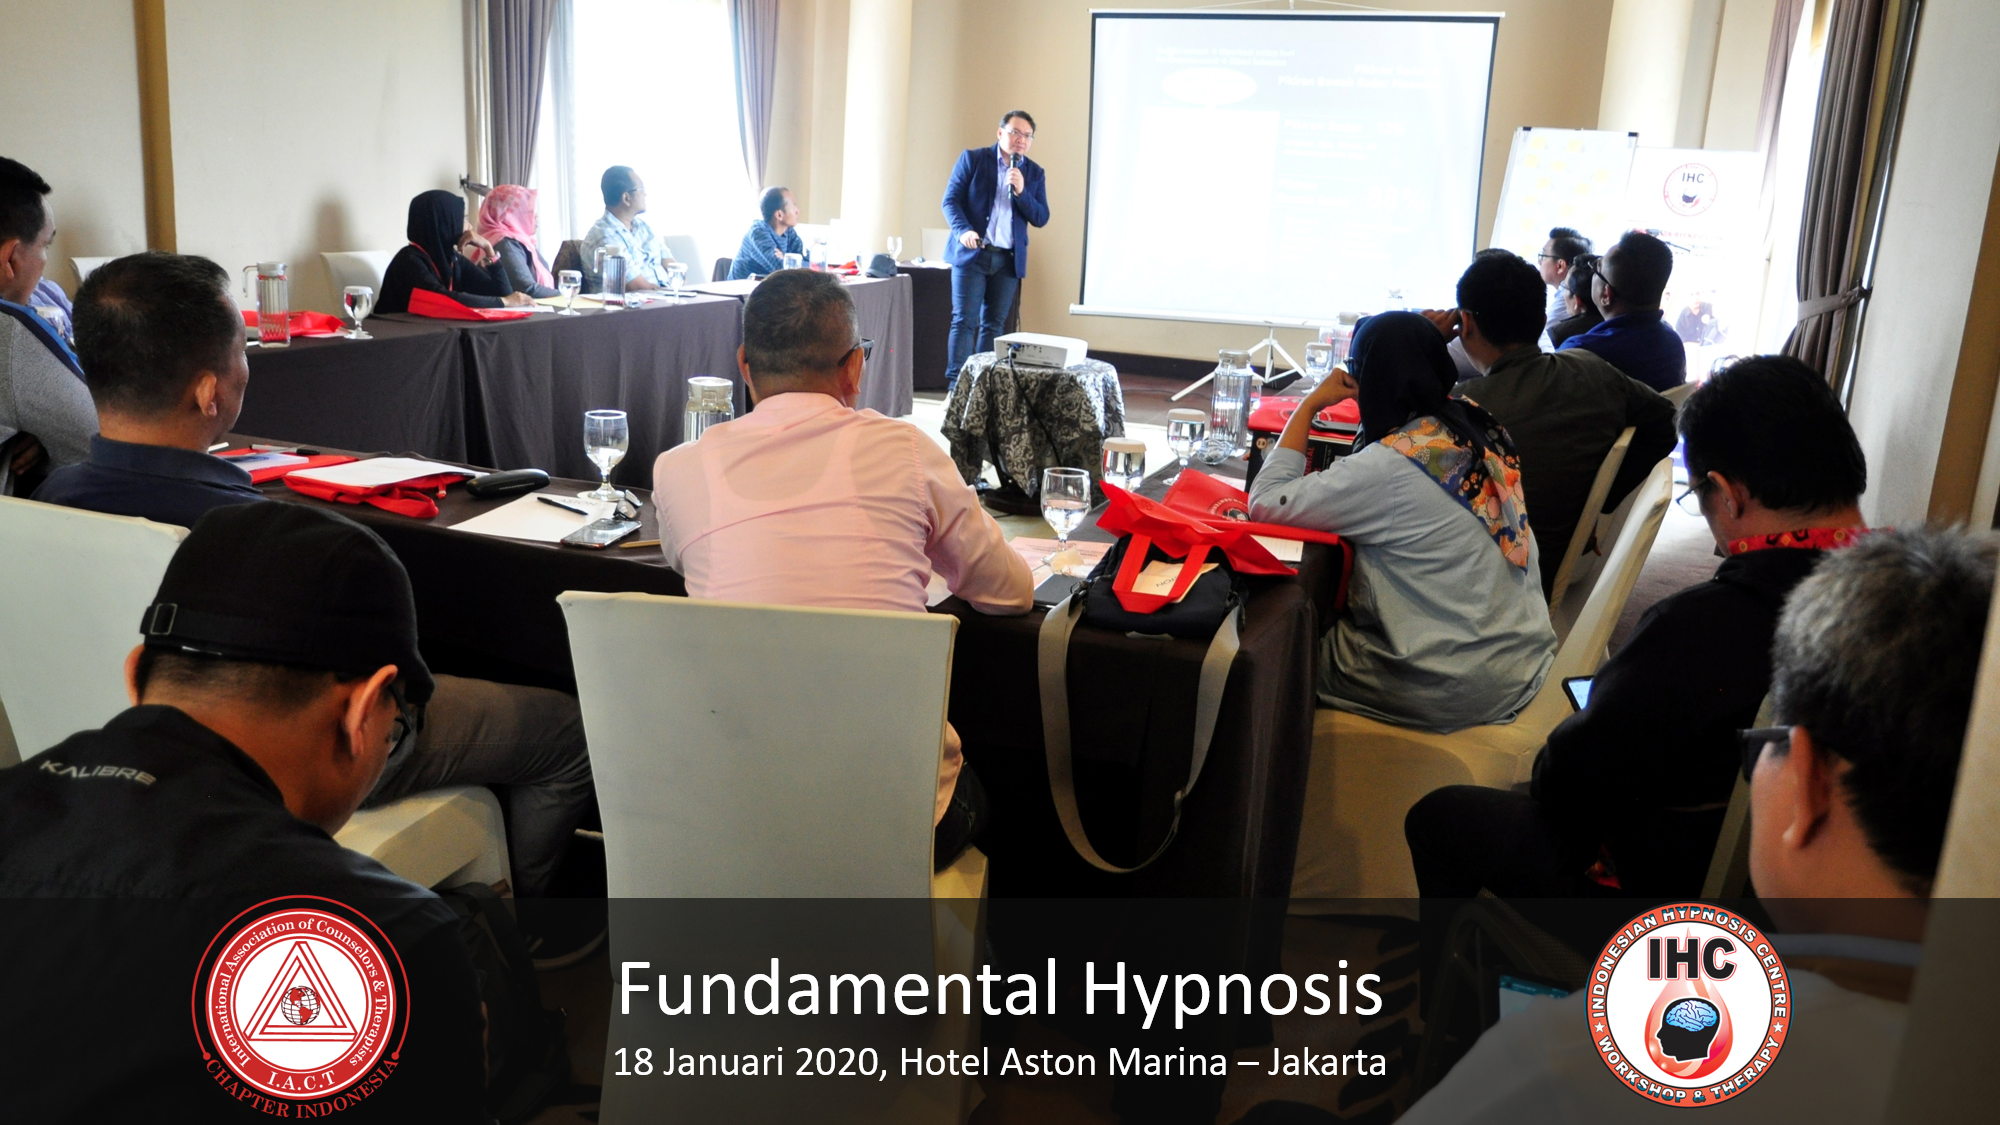 Andri Hakim2 - Fundamental Hypnosis - Januari 18, Ancol Jakarta 2020